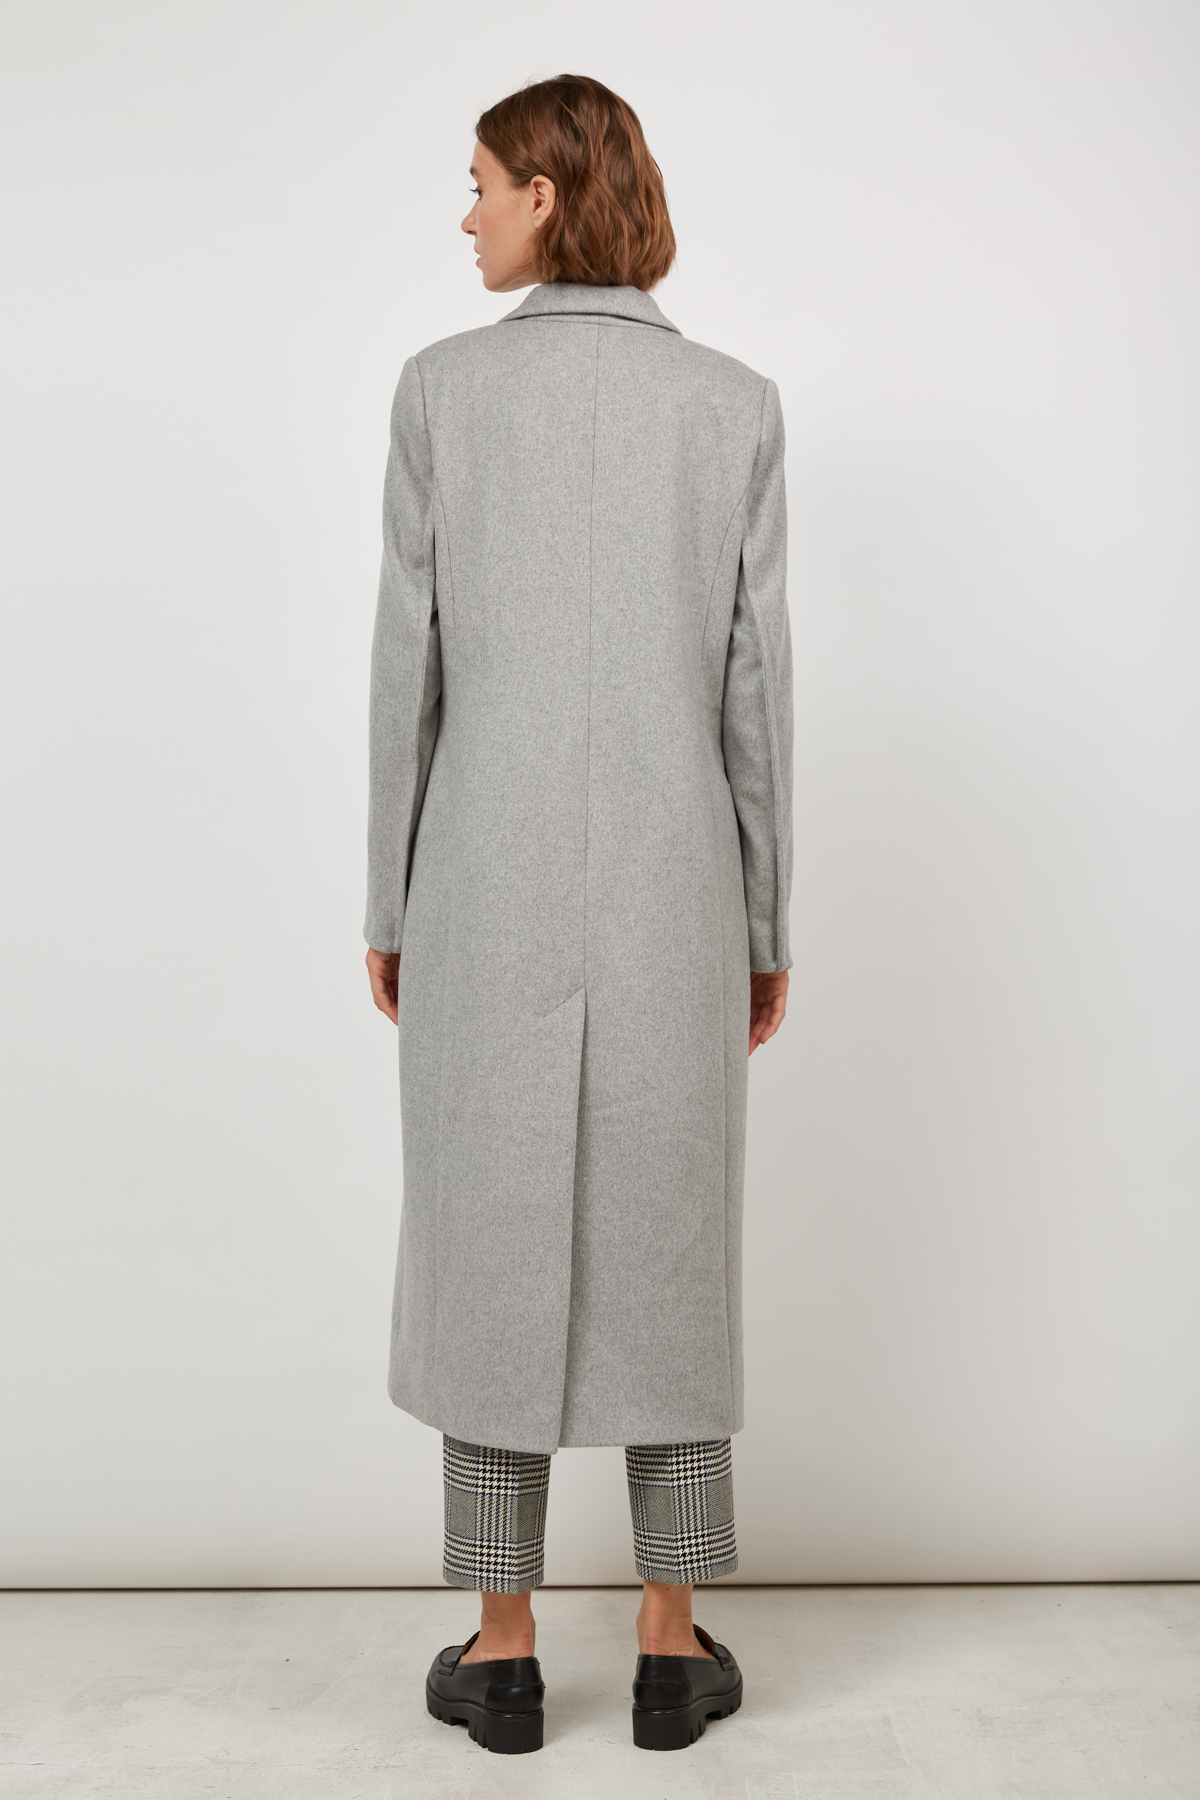 Gray long wool coat, photo 6